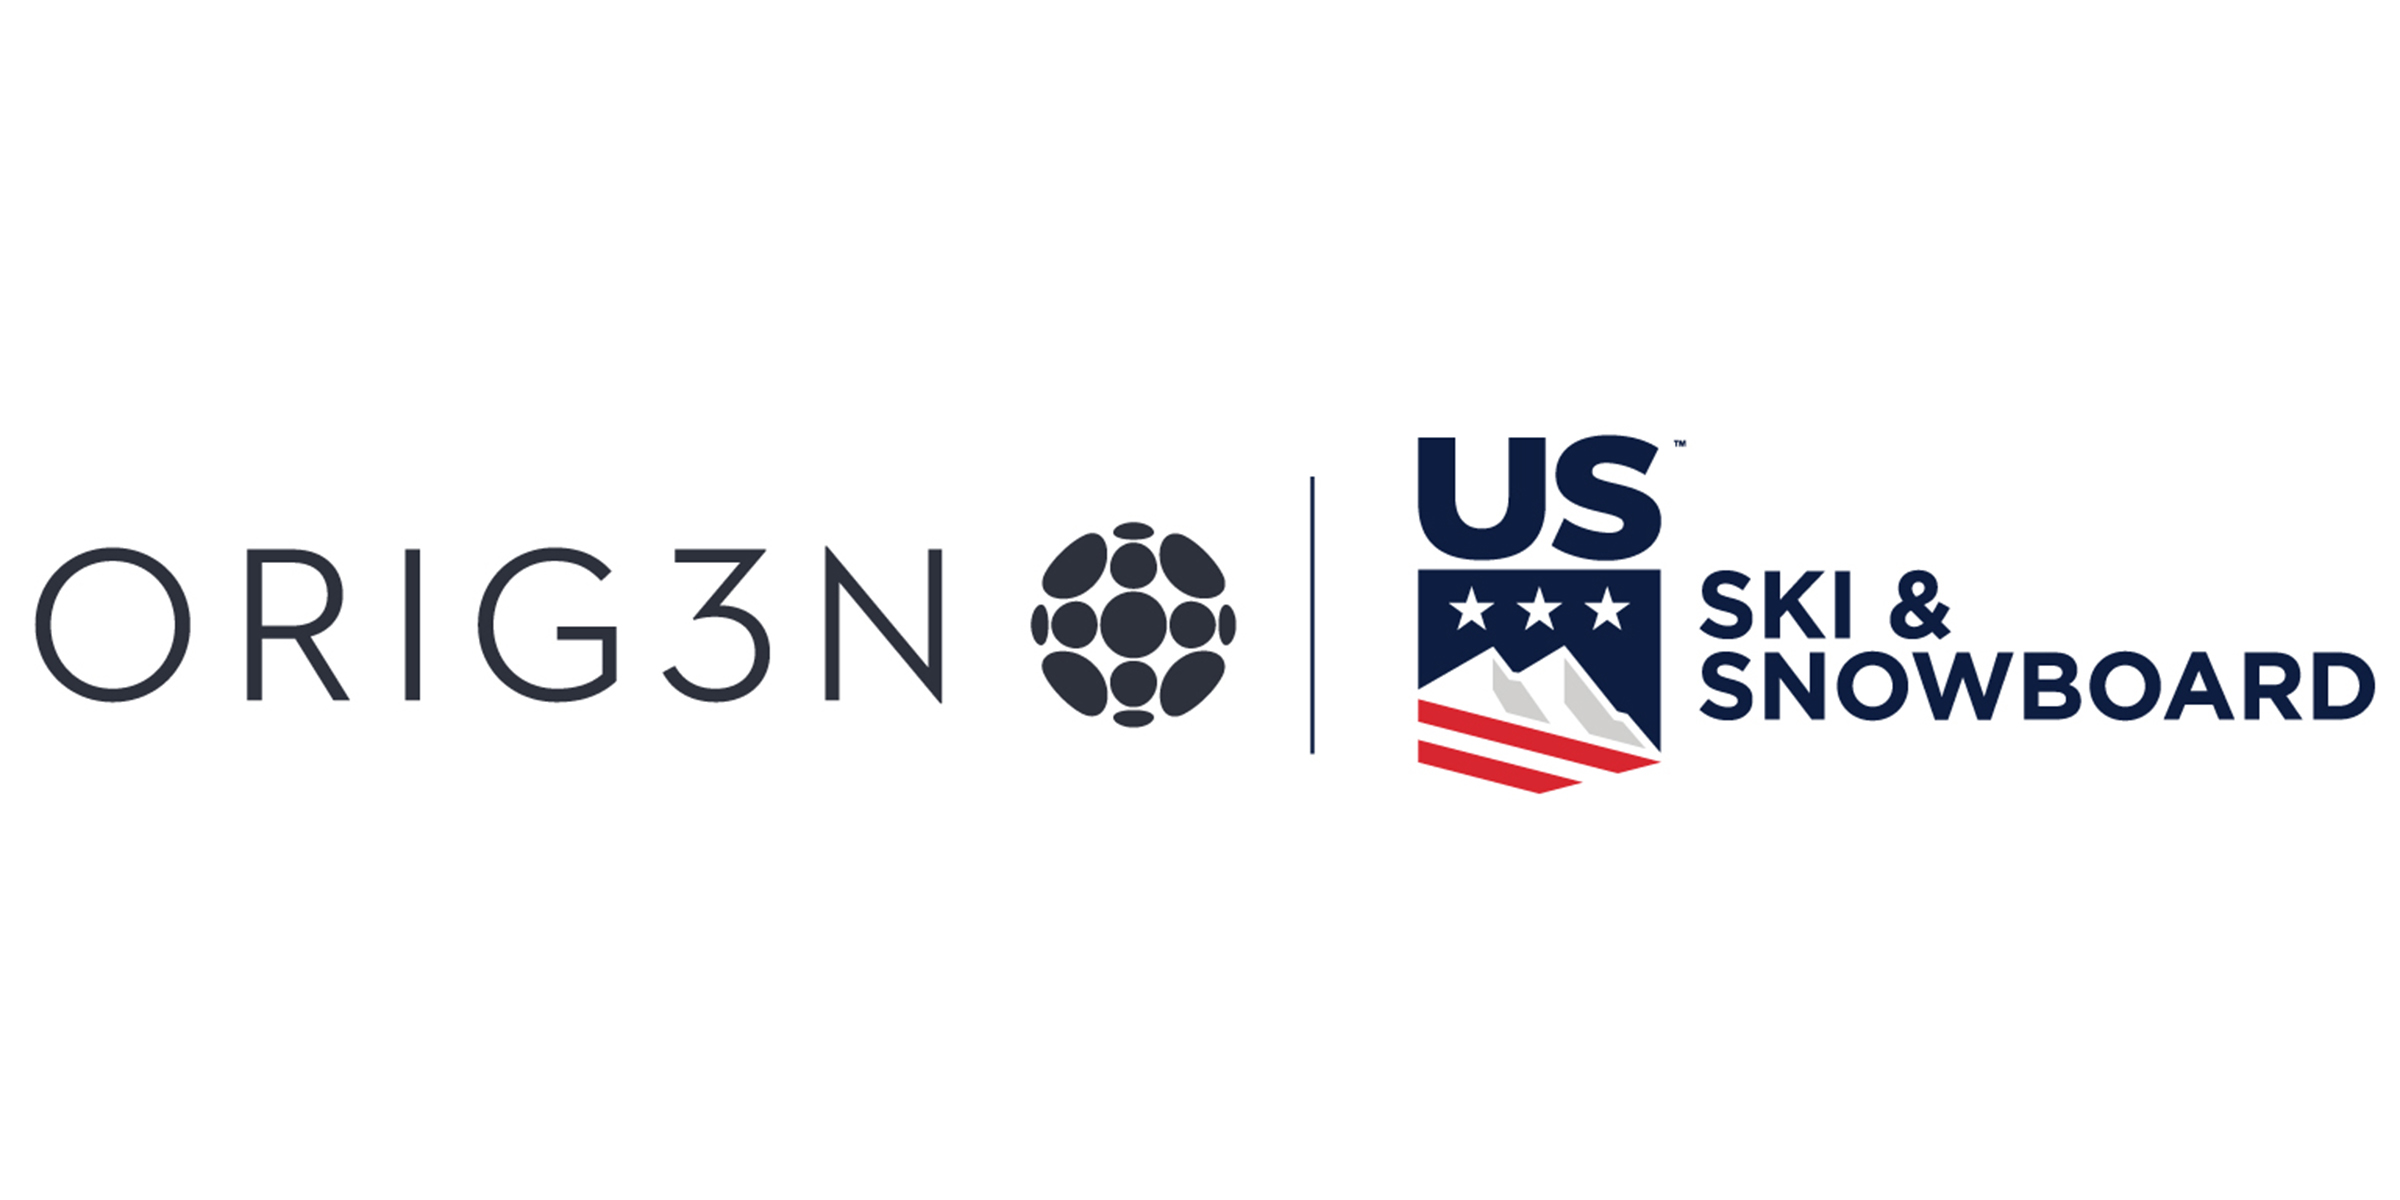 U.S. Ski & Snowboard and Orig3n in Multi-Year Partnership